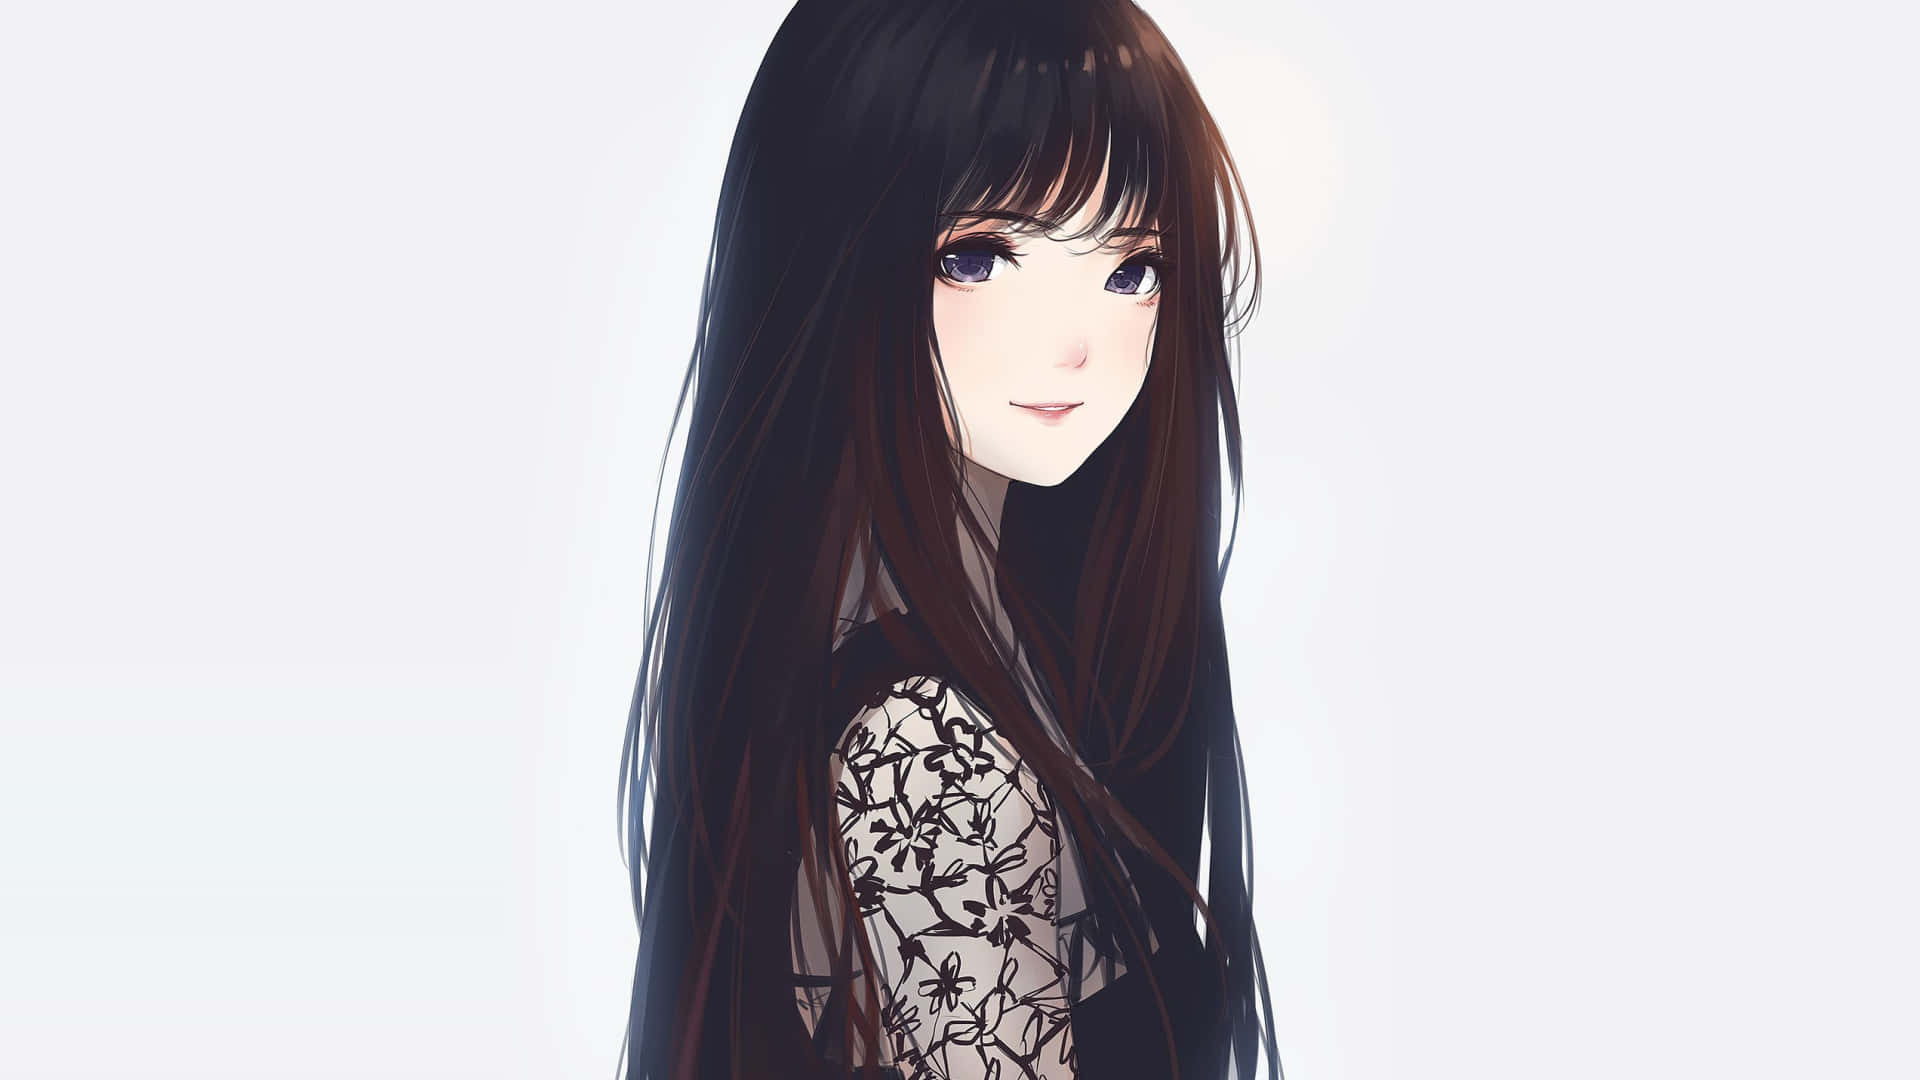 Korean Anime Girl With Long Black Hair